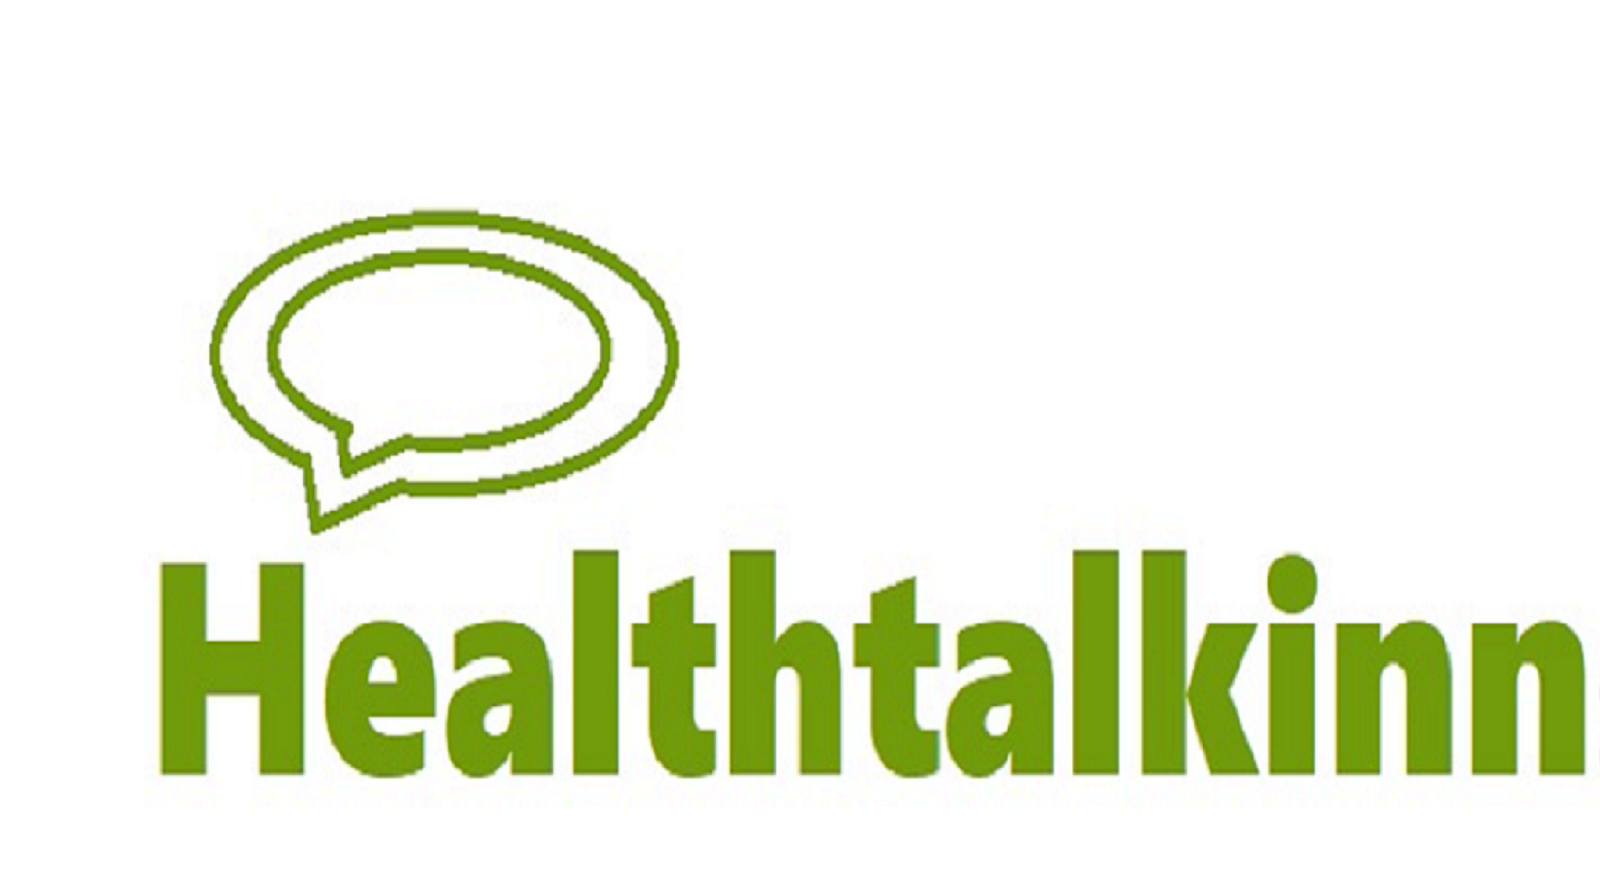 Healthtalkinn:: Health information you can trust.